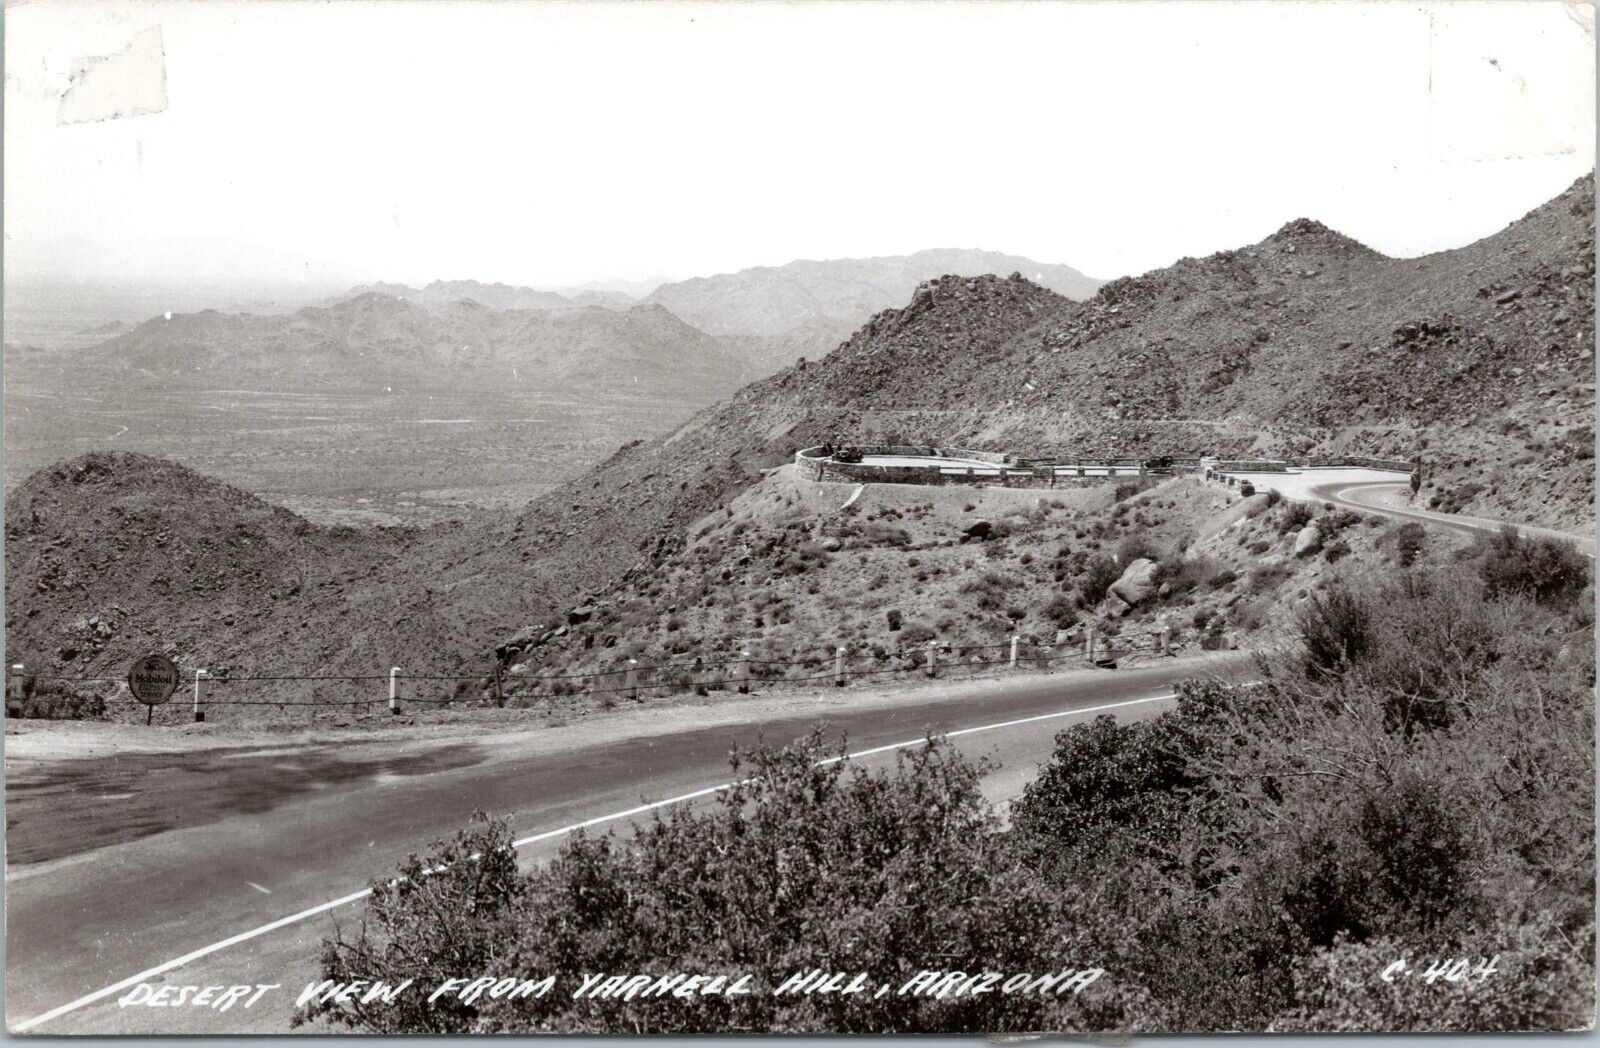 RPPC Desert View from Yarnell Hill, Arizona, c1930s Photo Postcard - Overlook